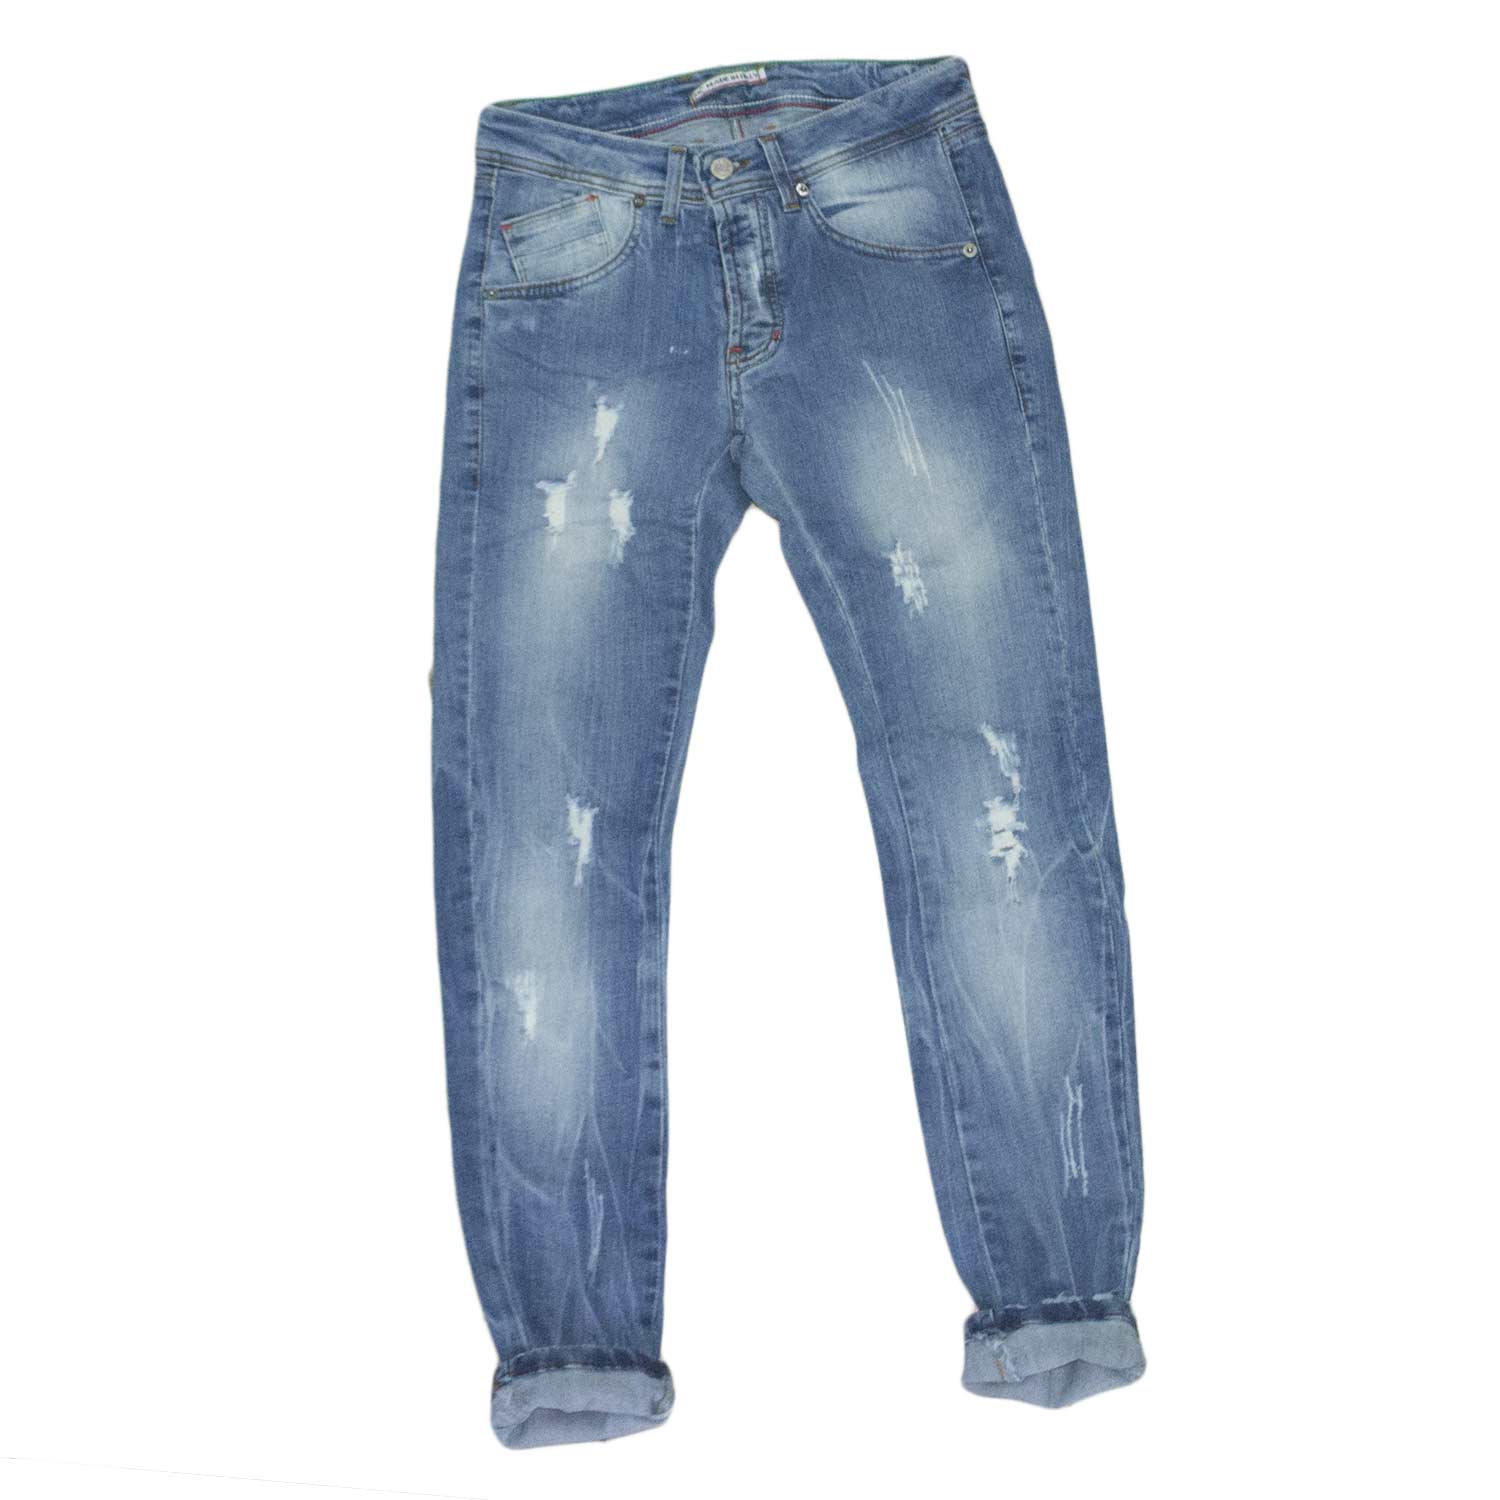 jeans uomo man blu stracciato monocromo moda made in italy.